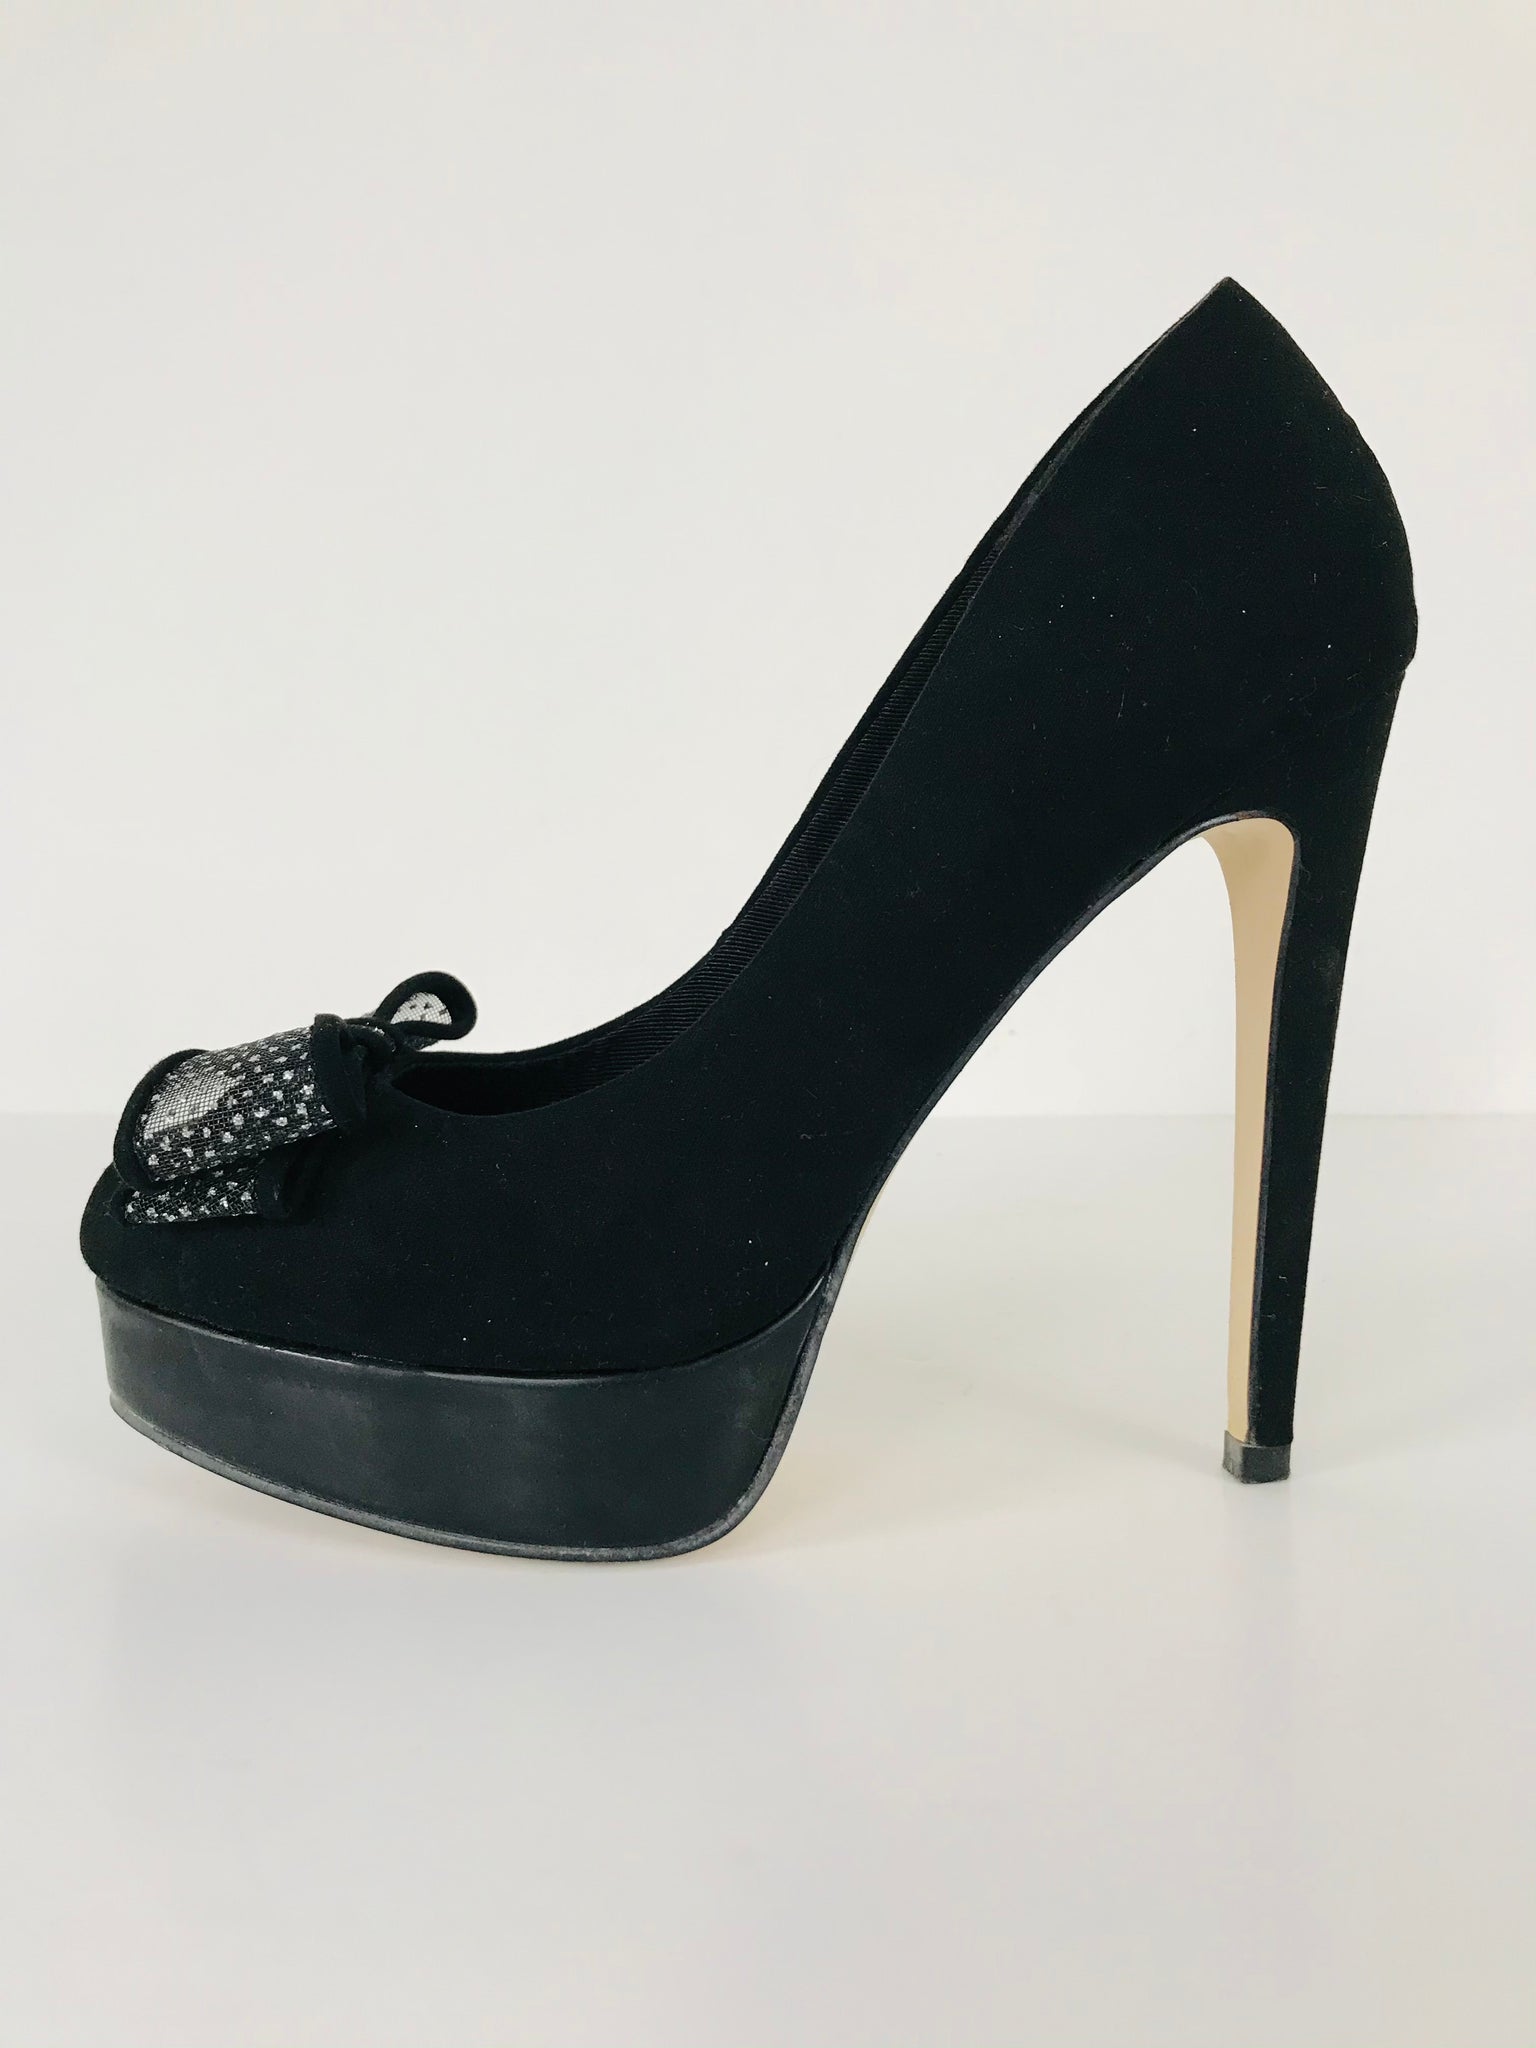 Miss KG Silver Diamonte High Heel Shoes UK Size 5 (38) Wedding Party | eBay